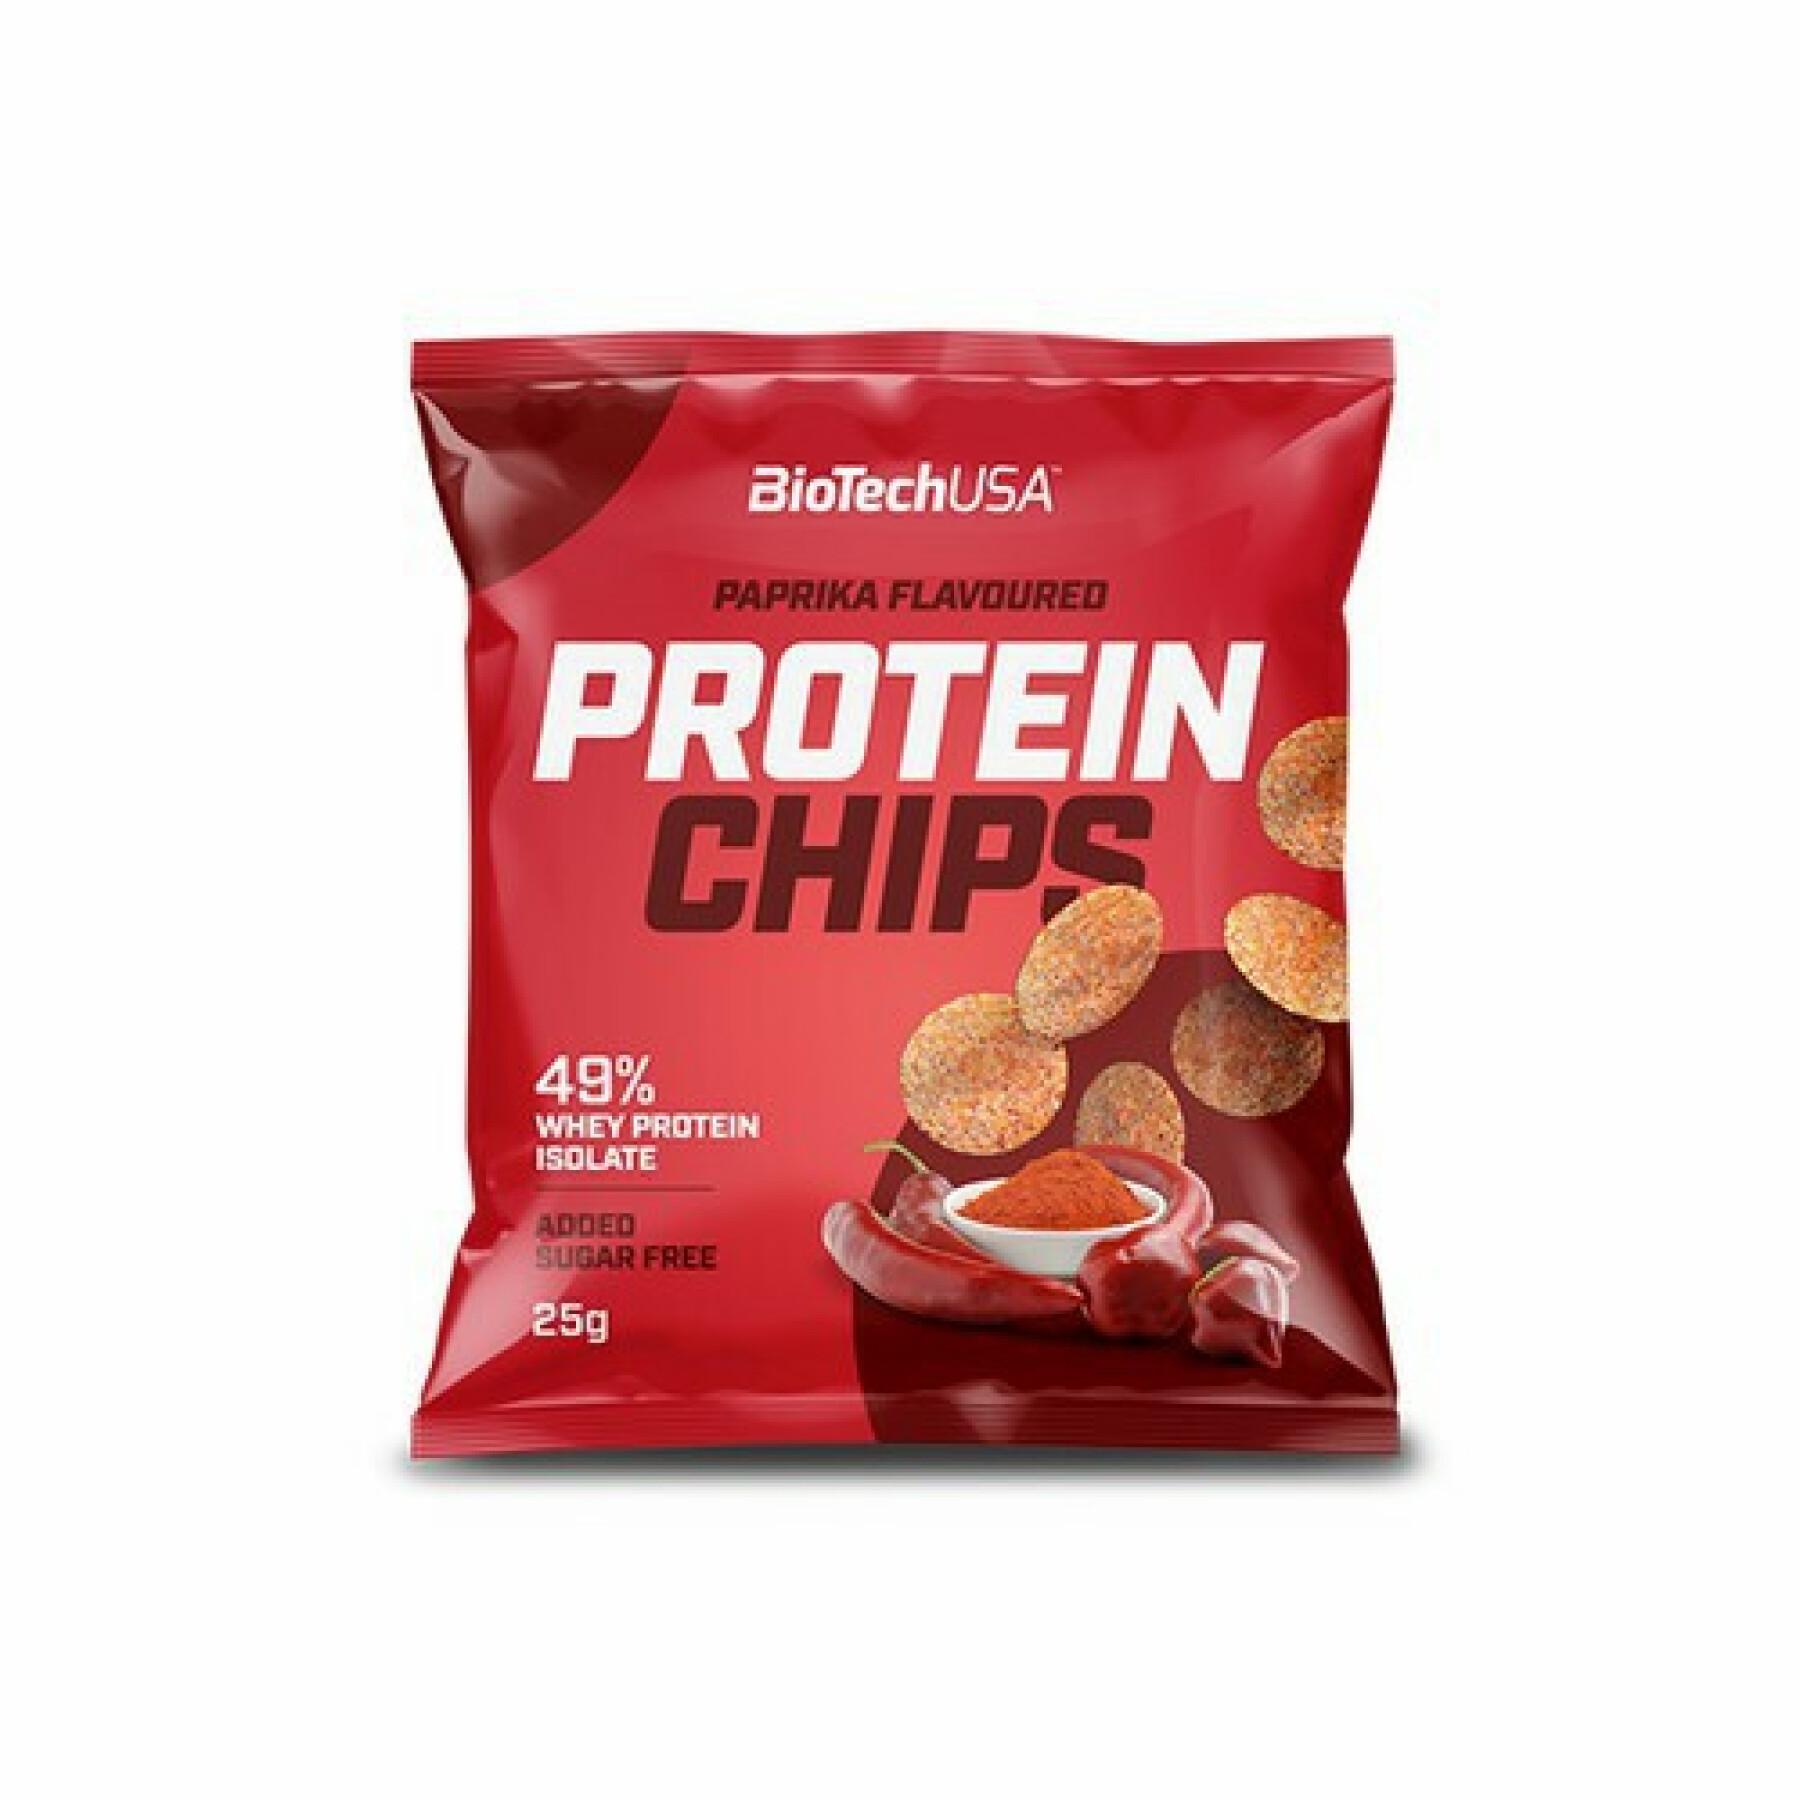 100 pacchetti di patatine proteiche Biotech USA - Paprika